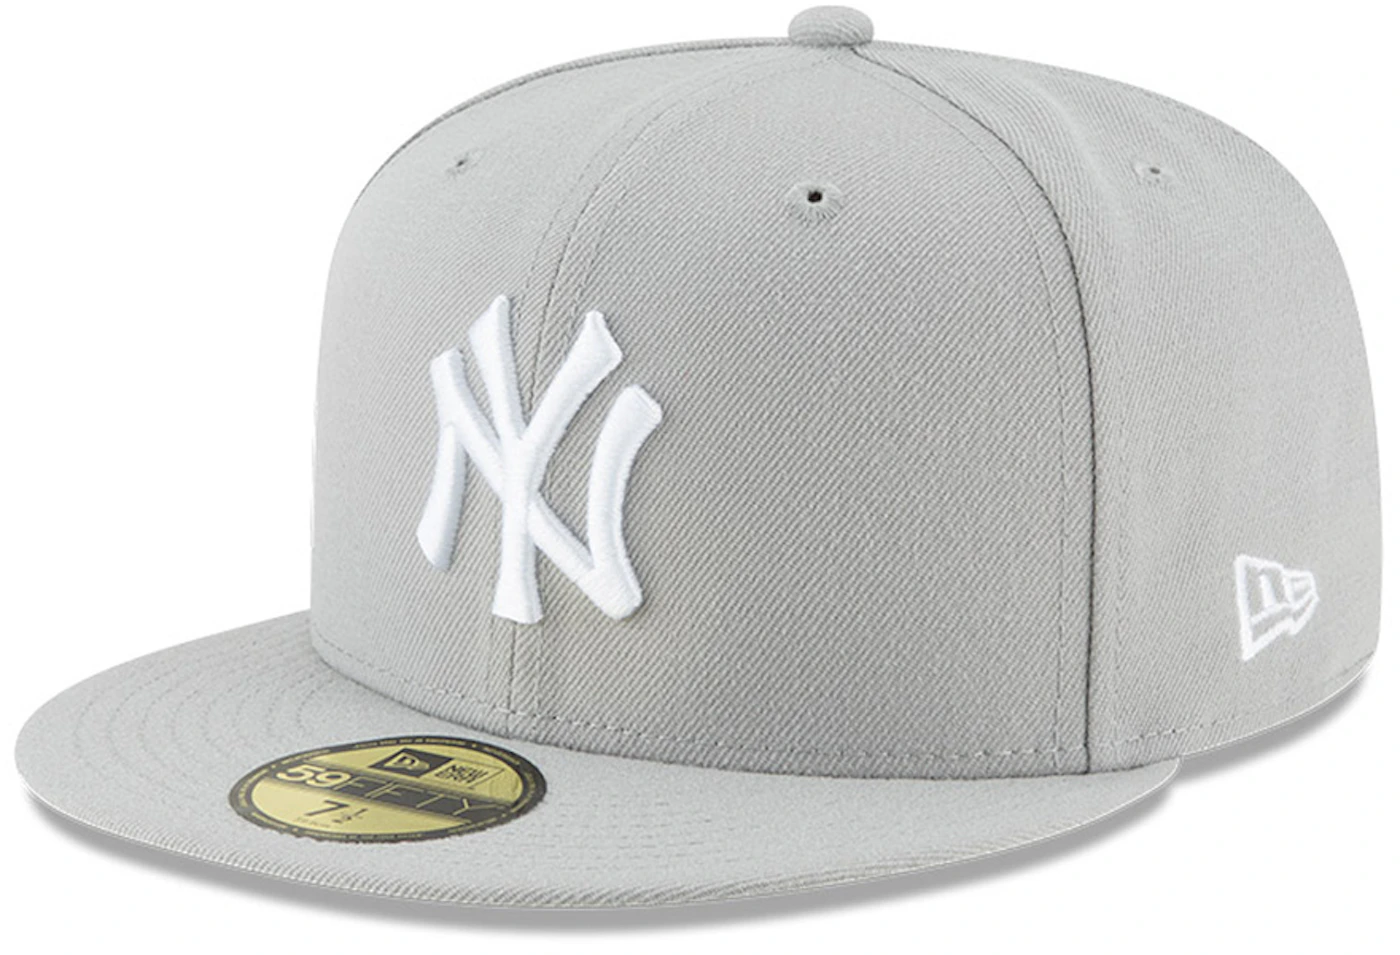 New Era MLB New York Yankees Basic 59FIFTY Fitted Hat (Dark Green) 7 7/8